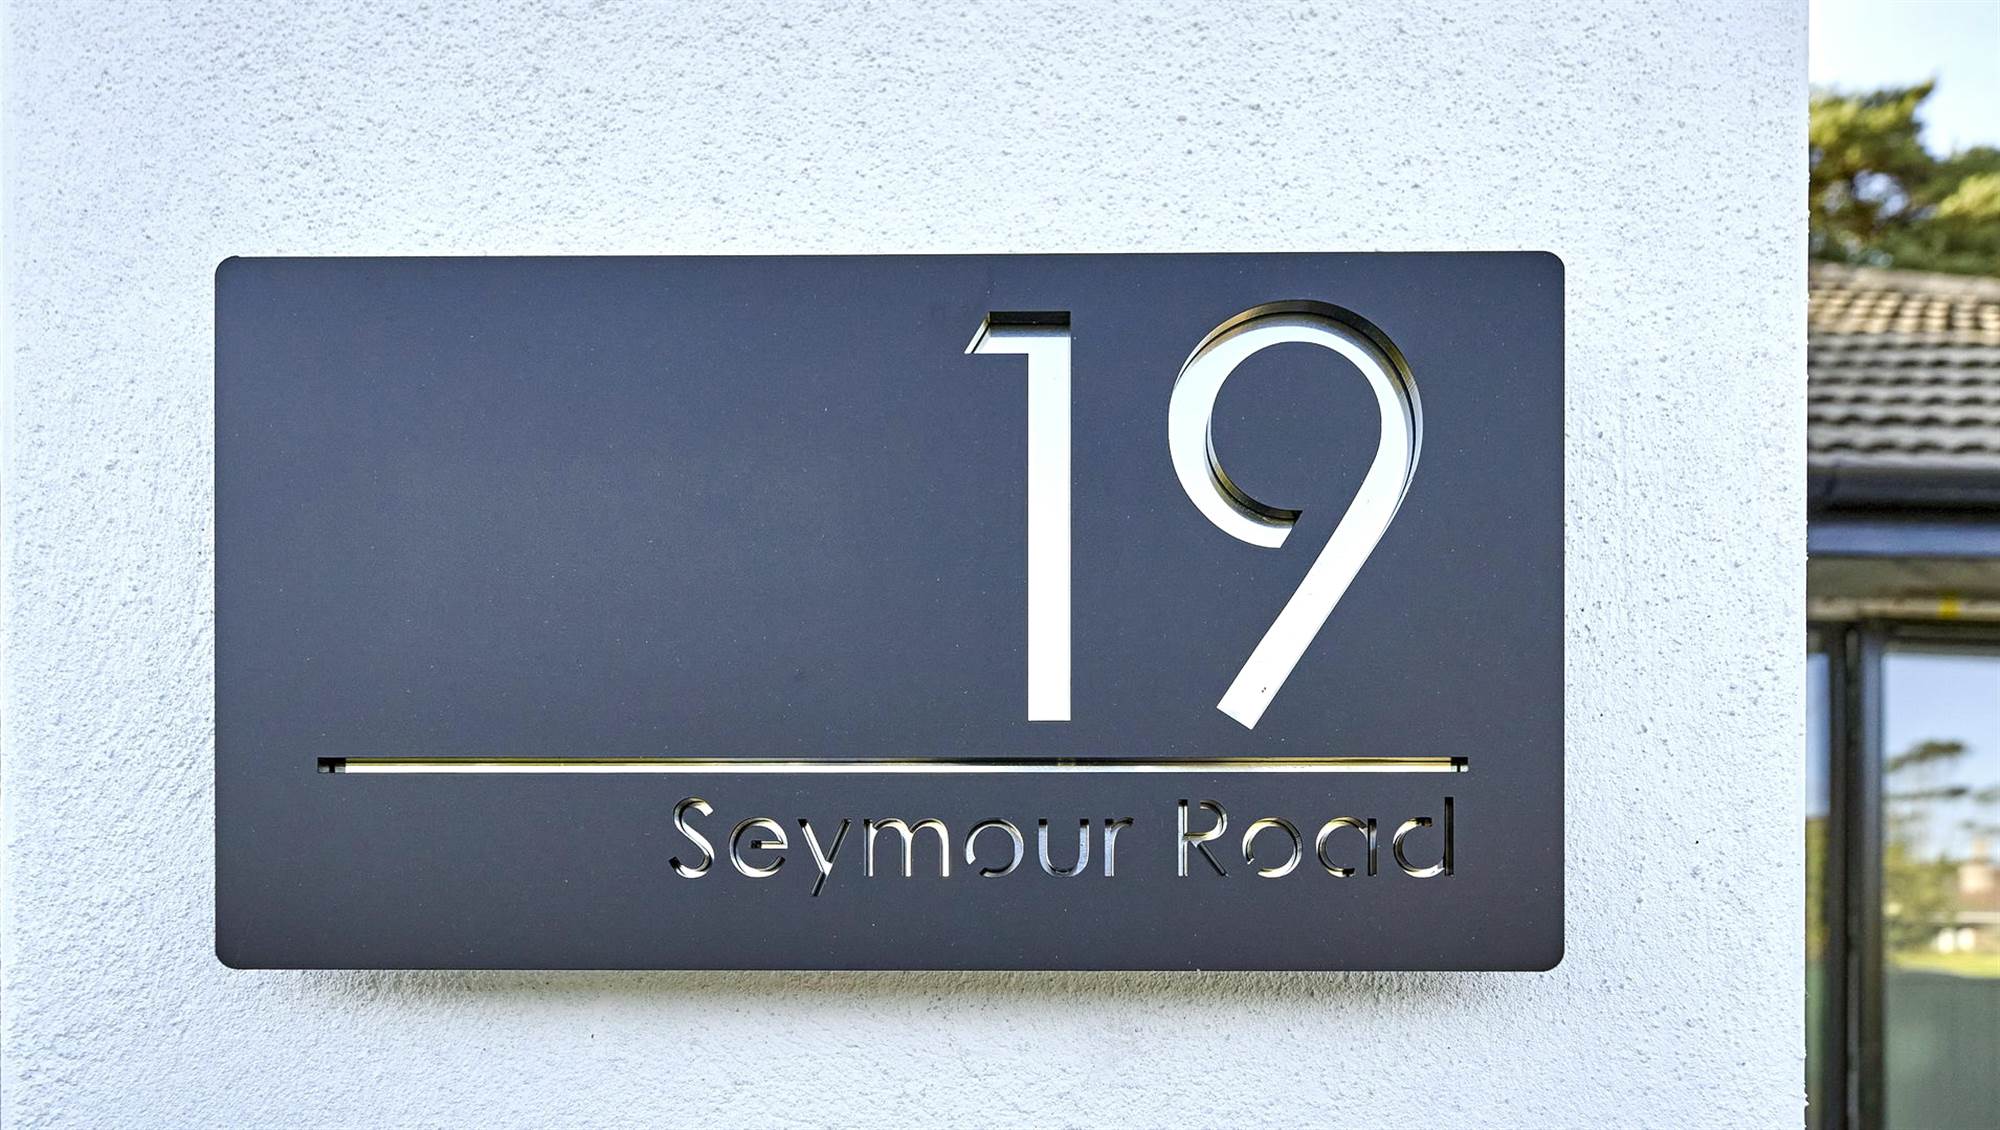 19 Seymour Road